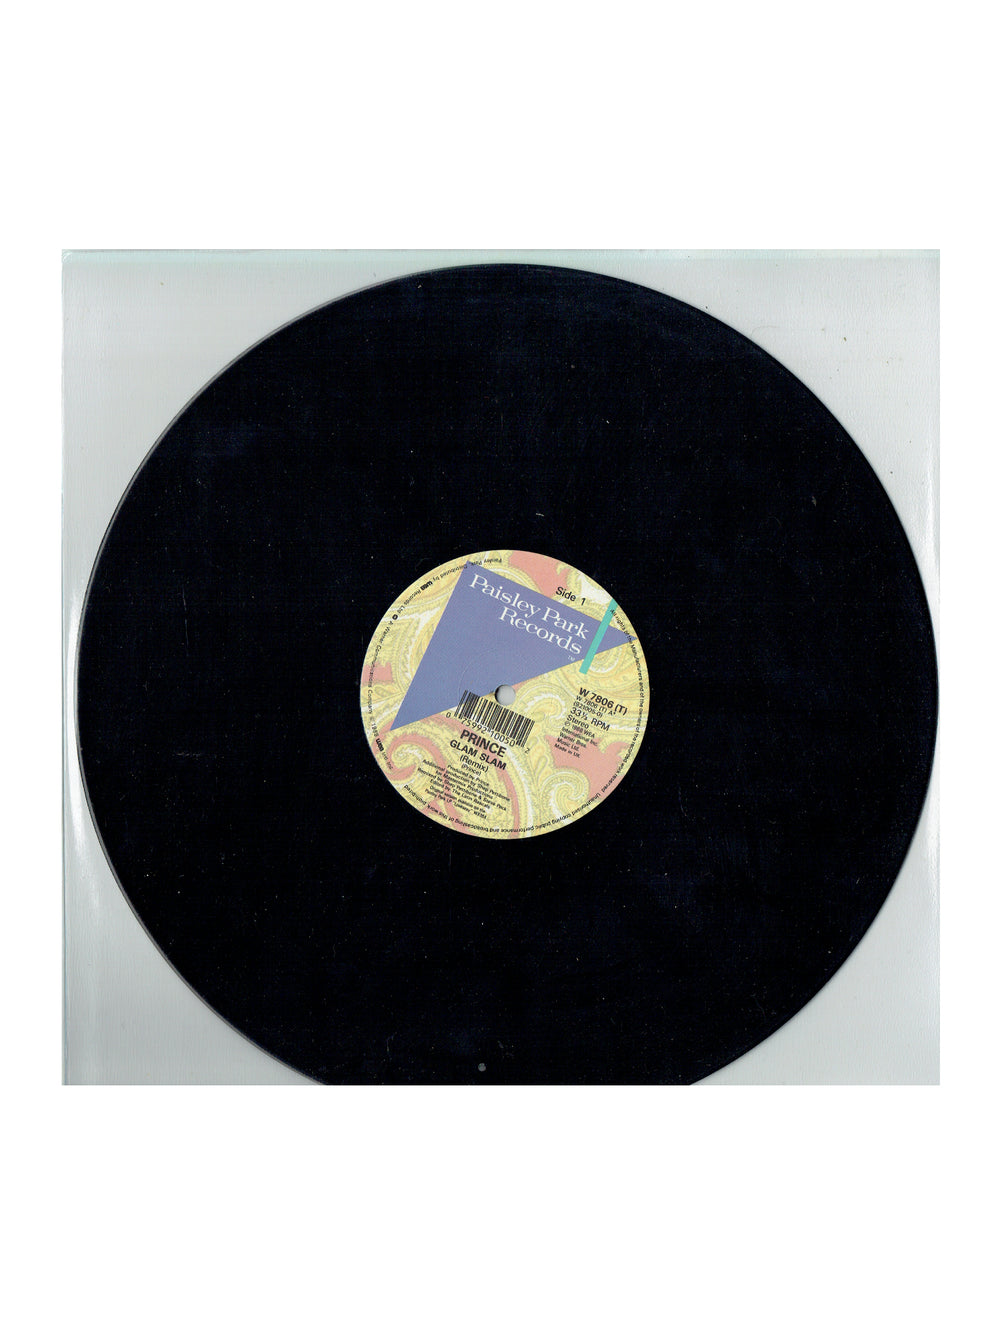 Prince – Glam Slam Vinyl 12" Single Europe Clear Plastic Sleeve Preloved : 1988 sms